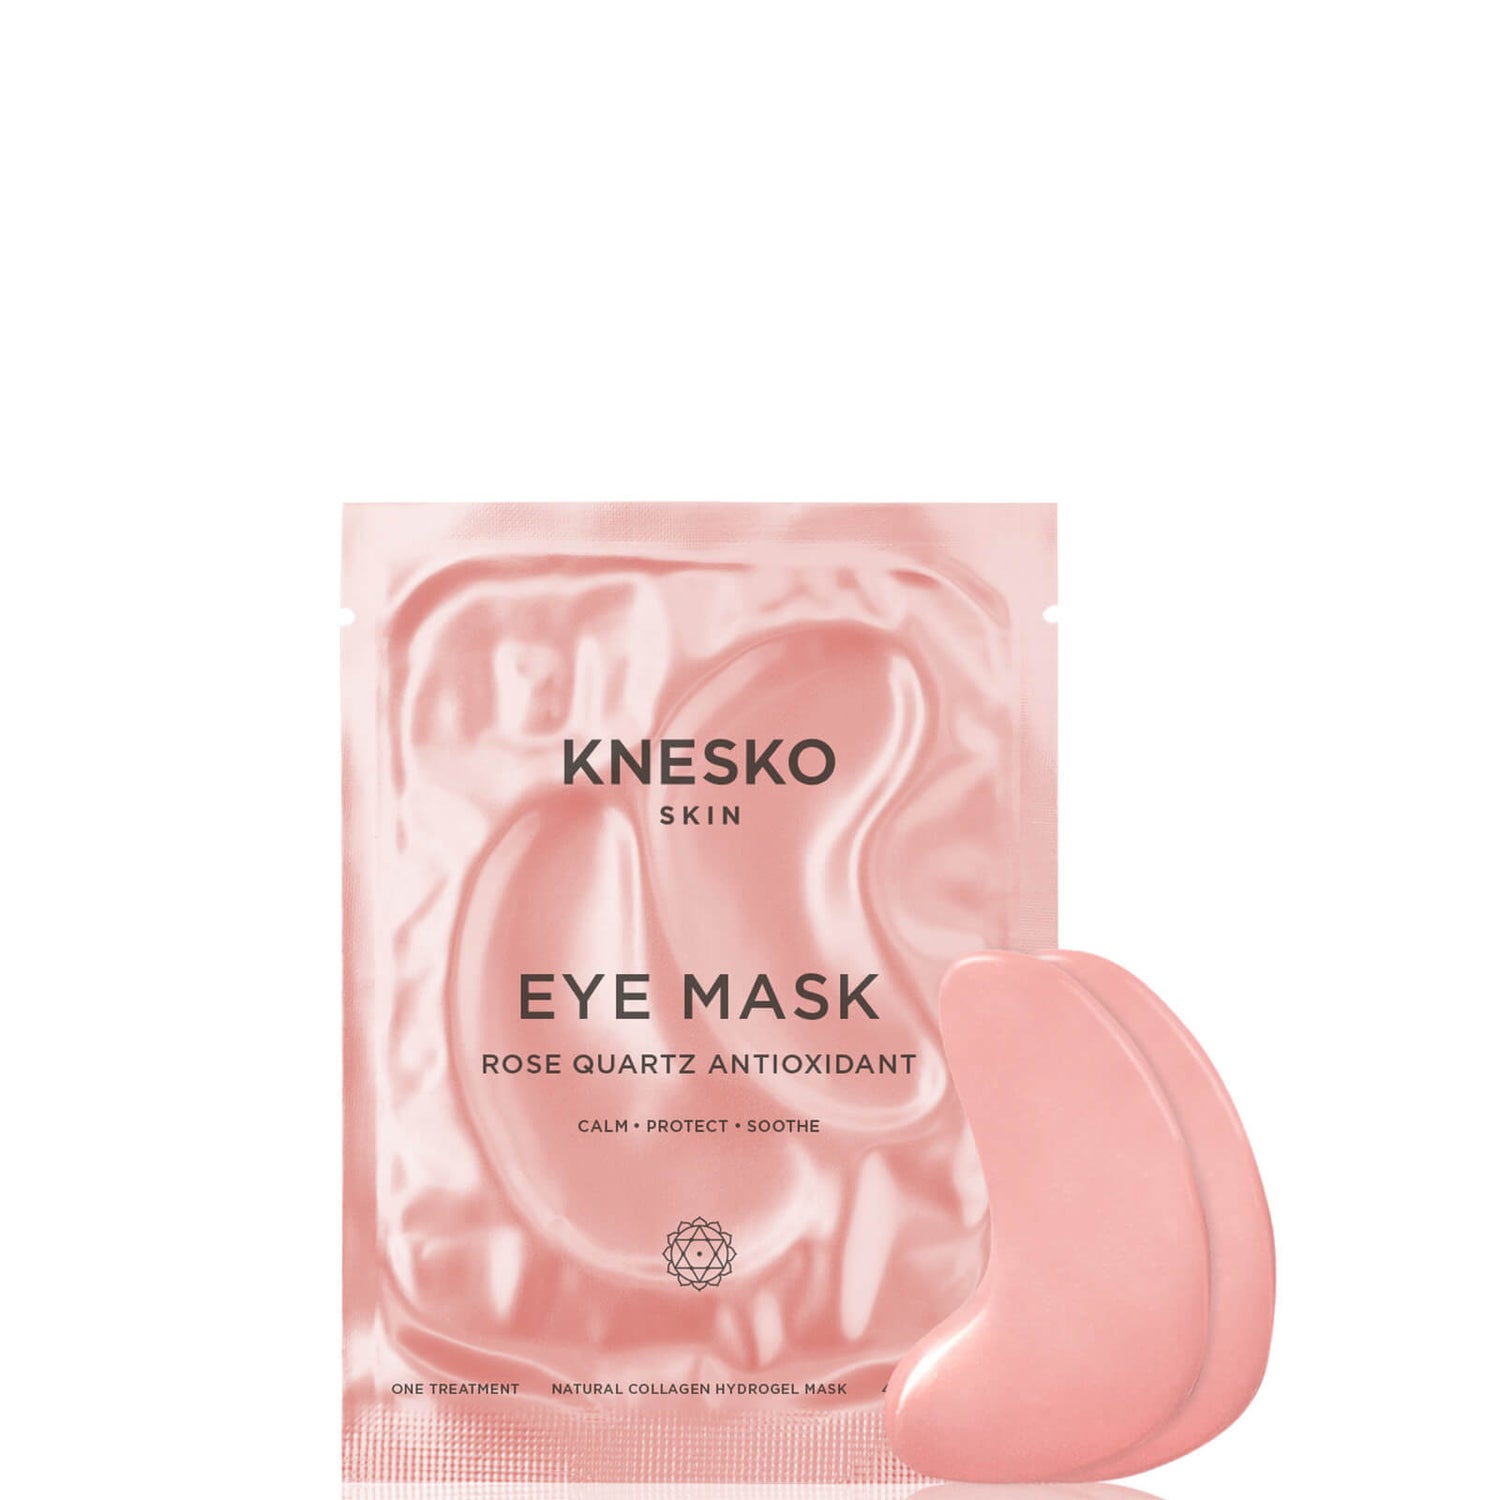 Knesko Skin Rose Quartz Antioxidant Eye Mask 4ml